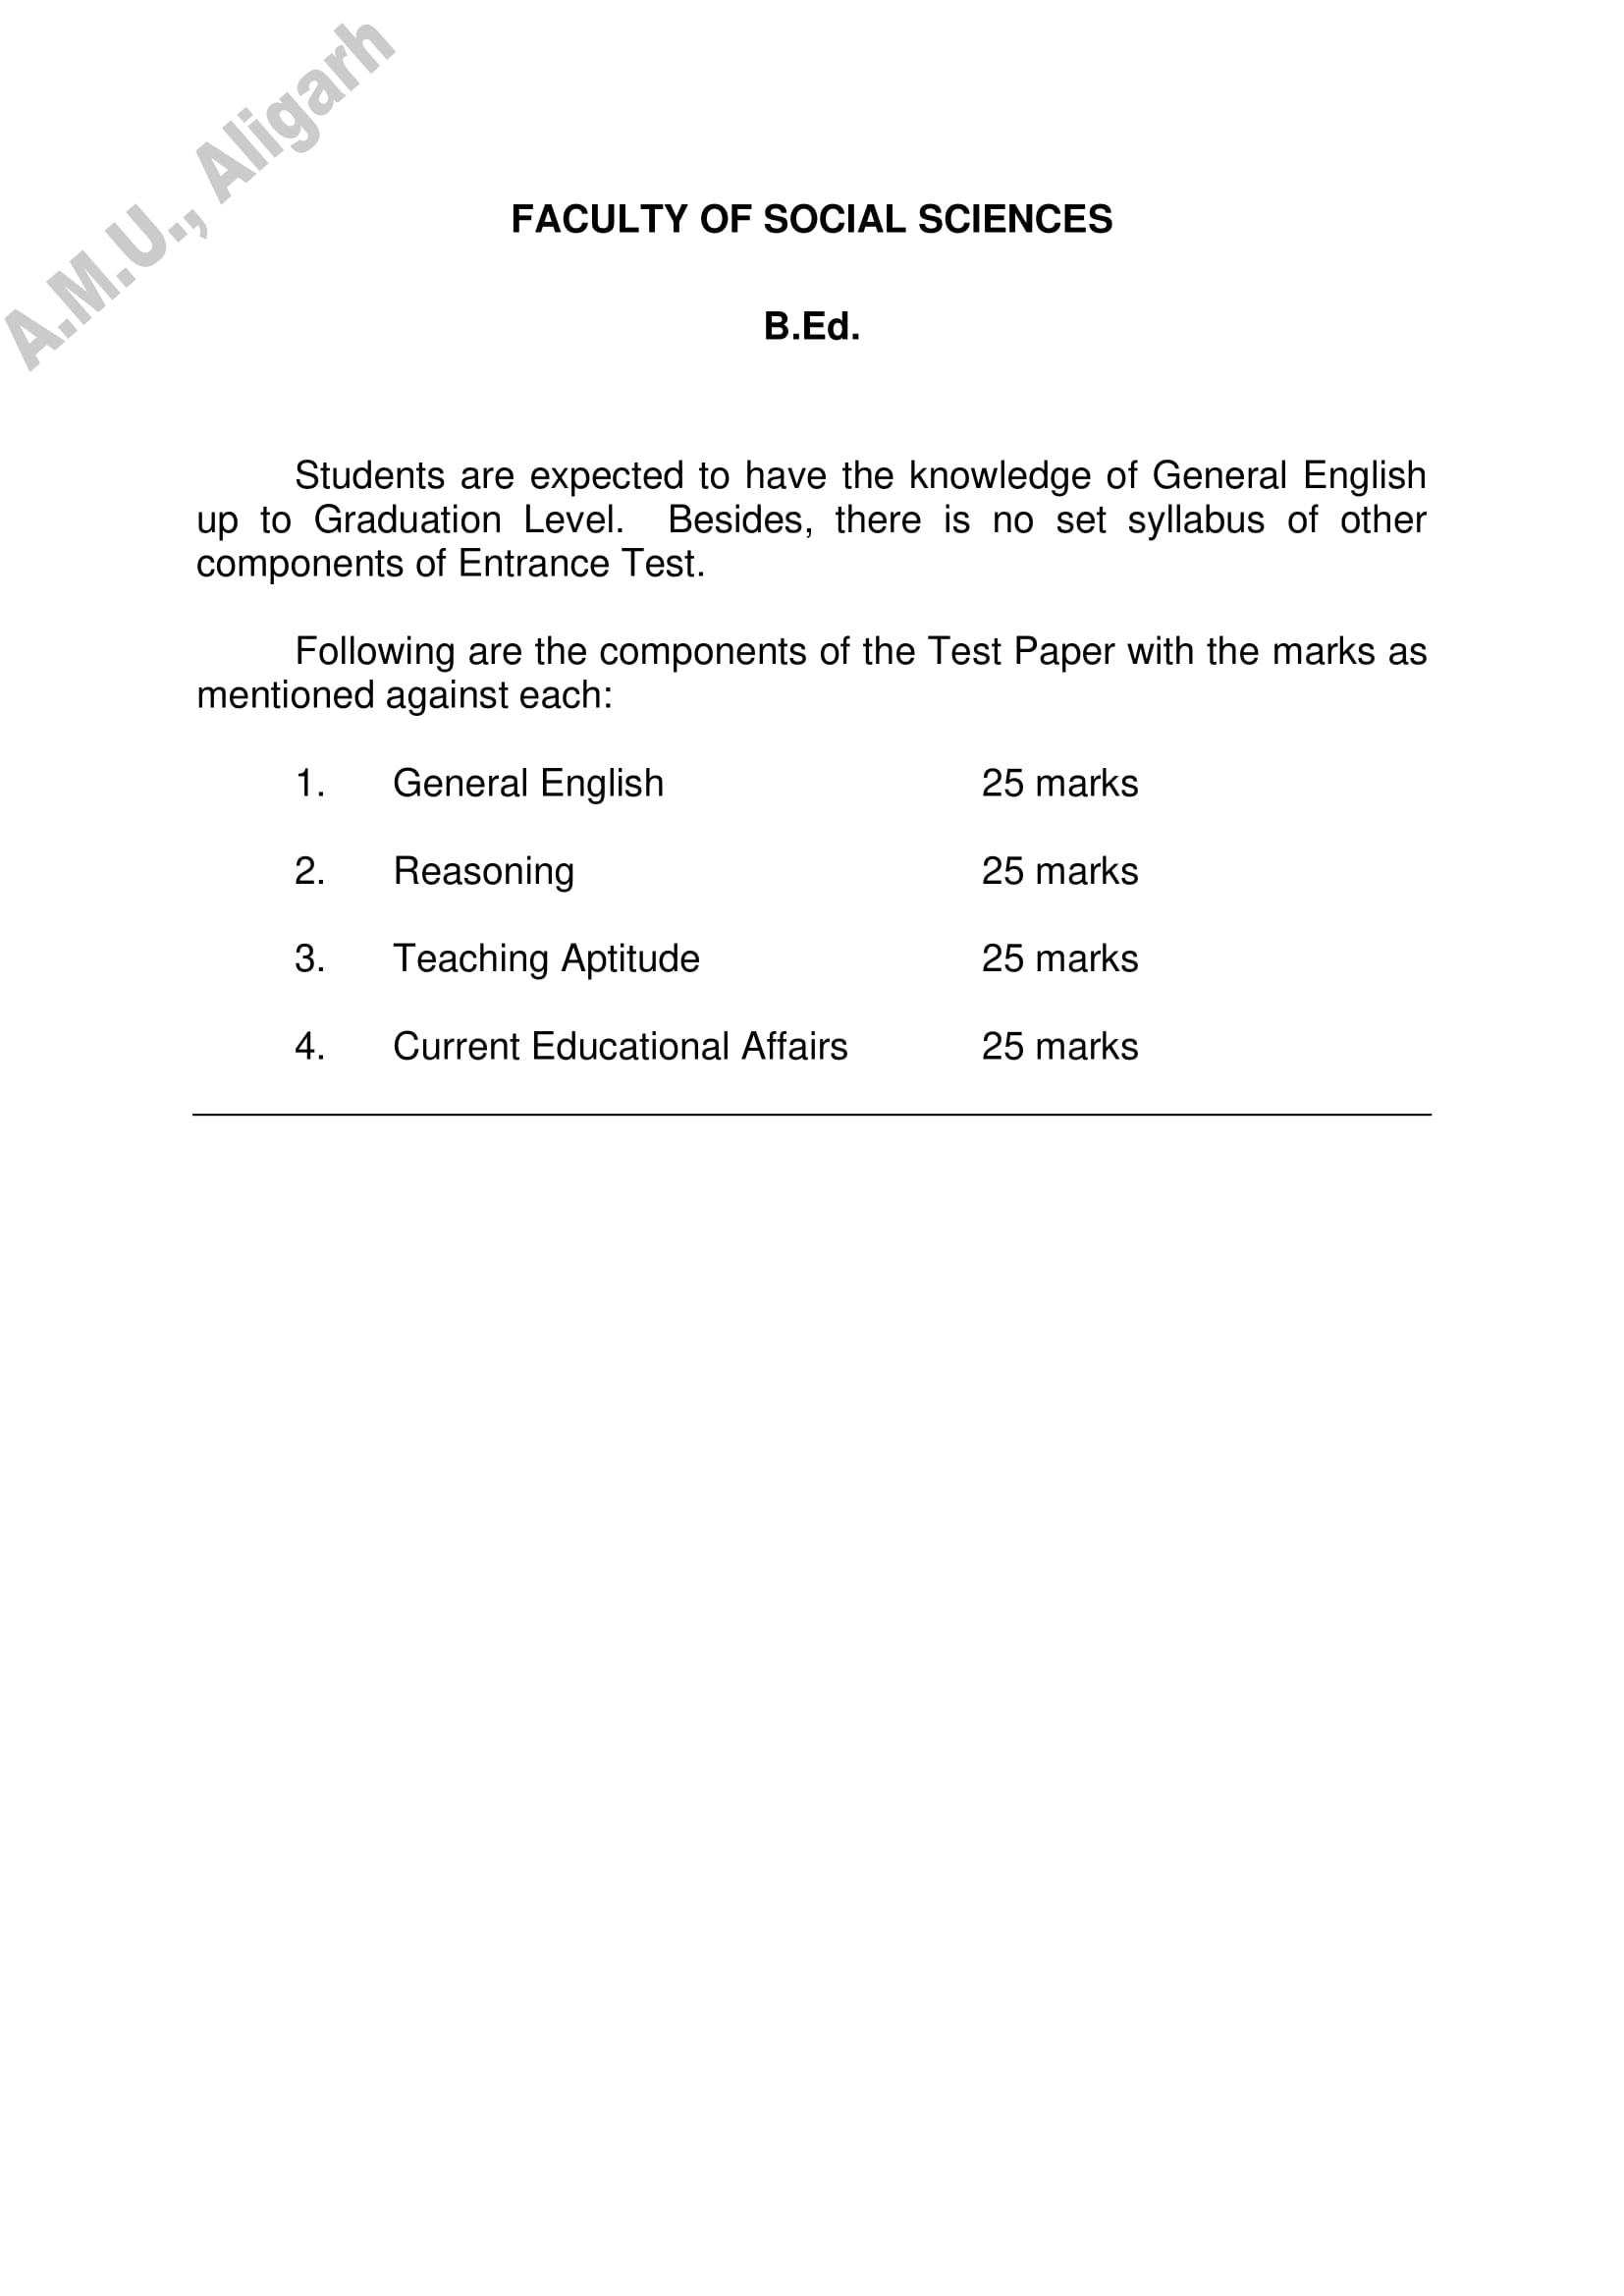 AMU Entrance Exam Syllabus for B.Ed in Social Sciences - Page 1